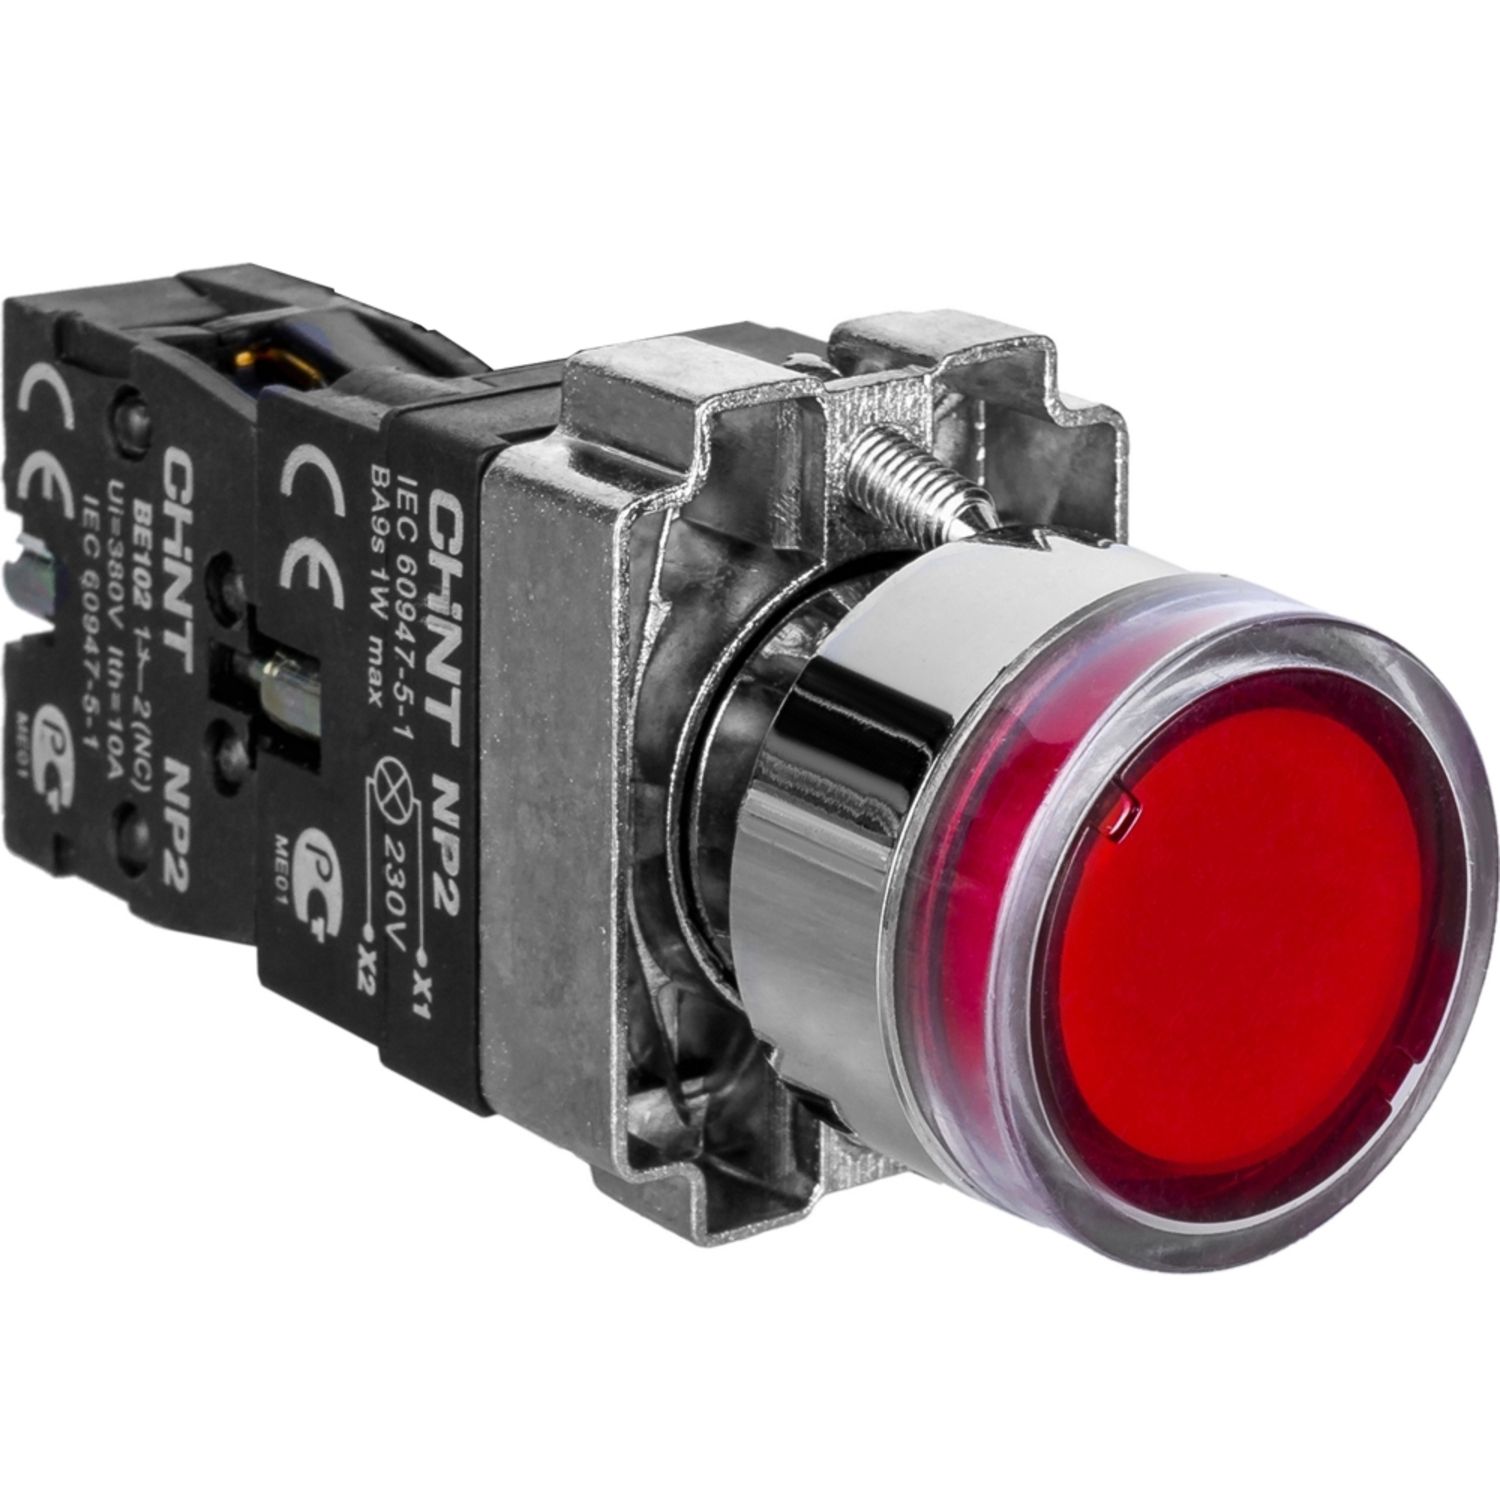 Кнопка управления NP2-BW3462 1НЗ красная AC220В(LED) IP40